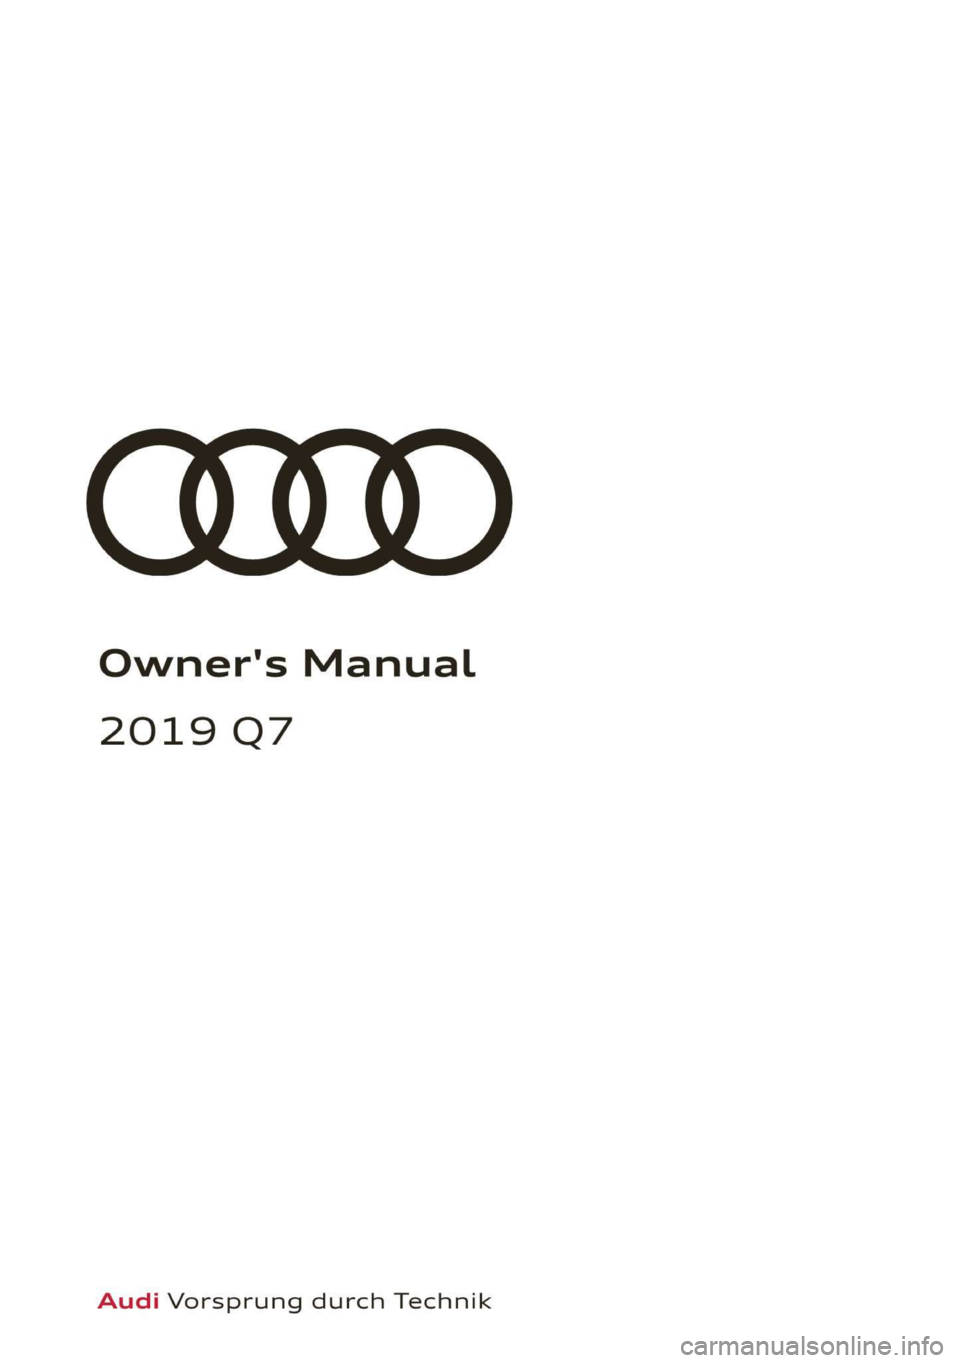 AUDI Q7 2019  Owner´s Manual Owner'sManual
2019Q7
AudiVorsprungdurchTechnik  